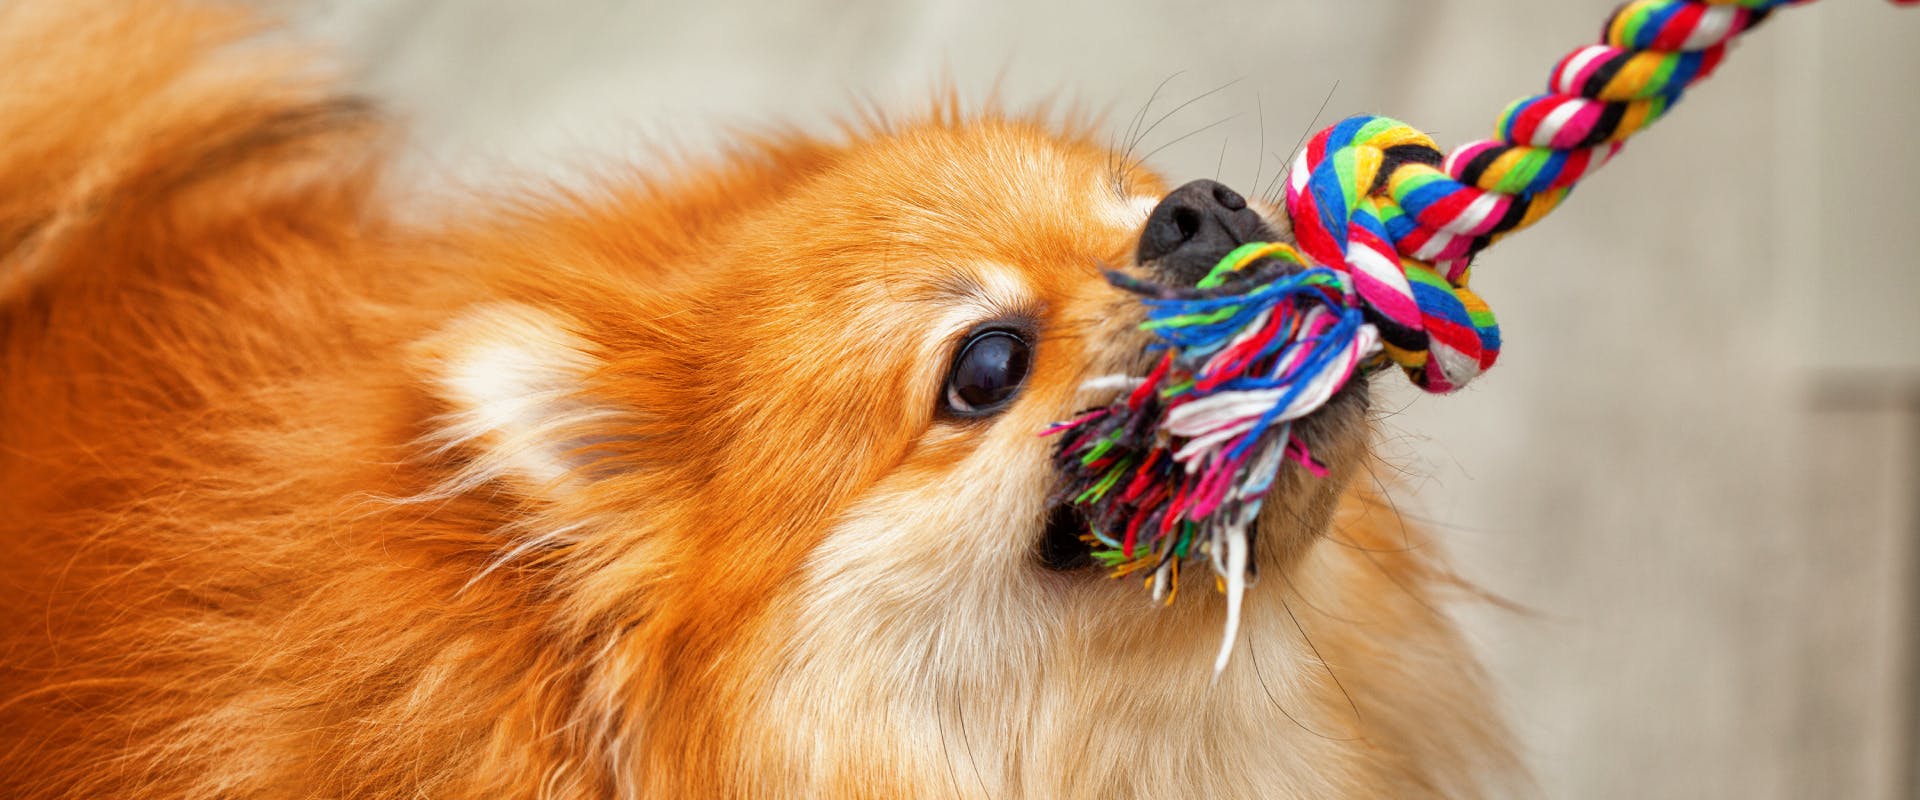 DIY Dog toys: Rope toy & treat dispenser! 